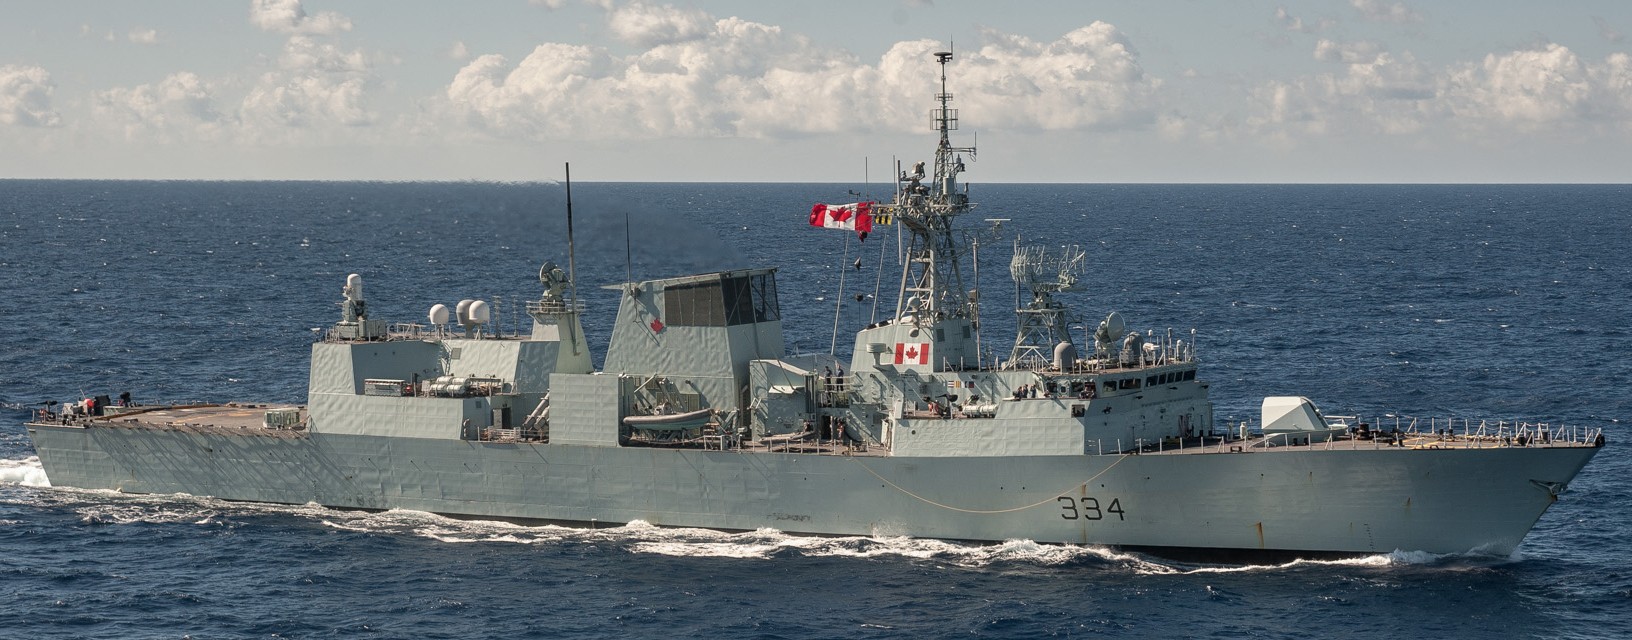 ffh-334 hmcs regina halifax class helicopter patrol frigate ncsm royal canadian navy 27